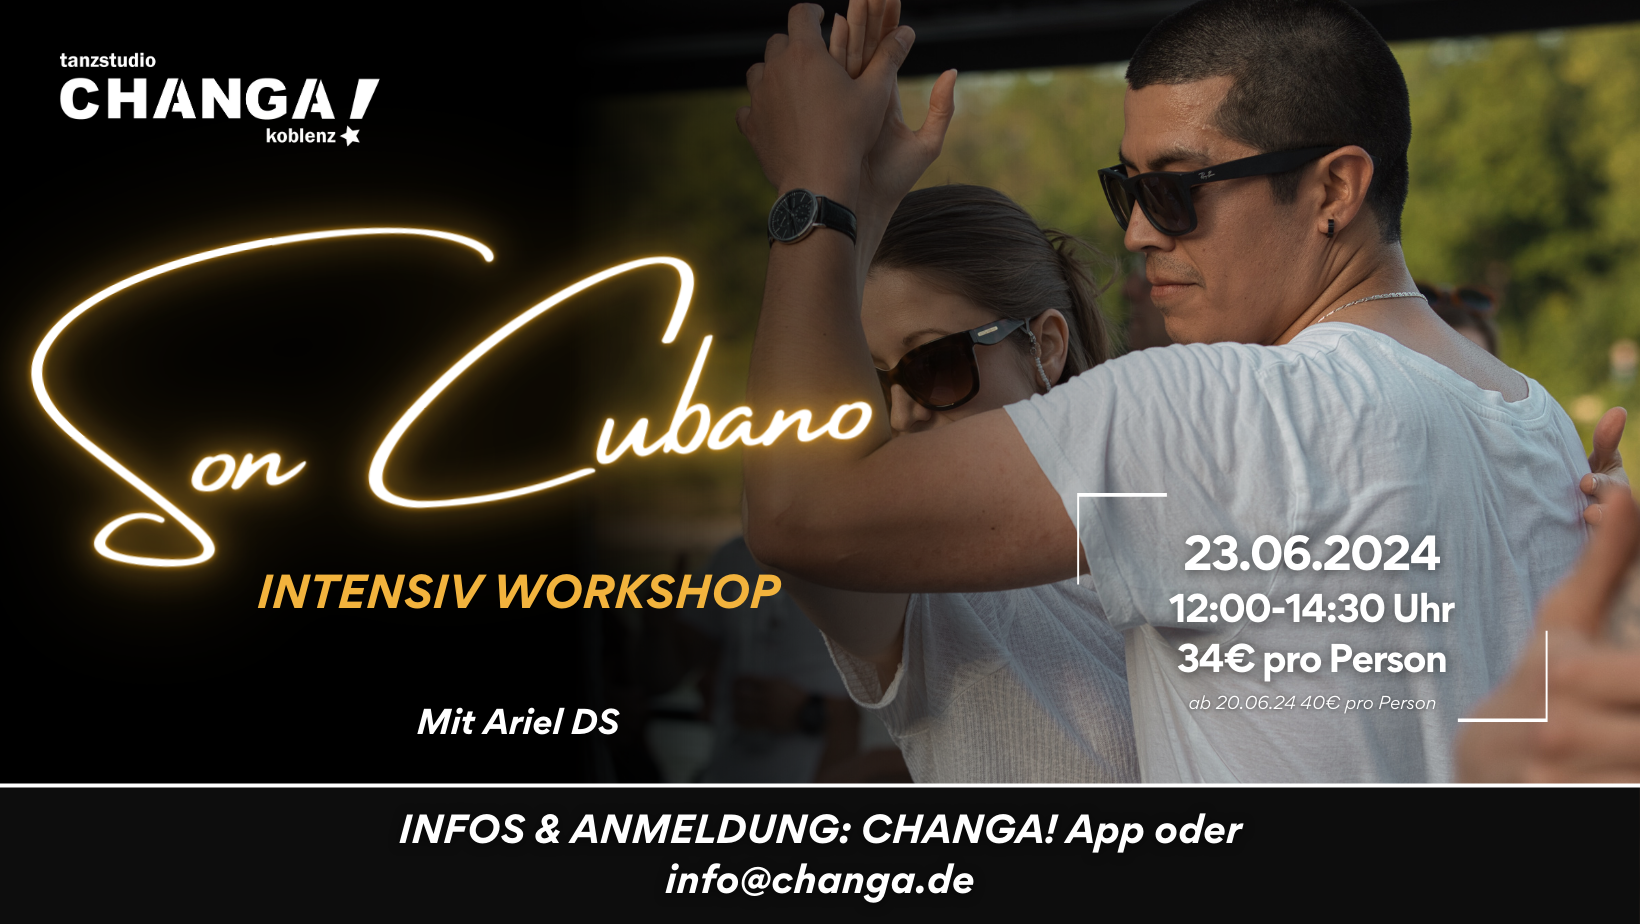 Son Cubano Workshop mit Aiel